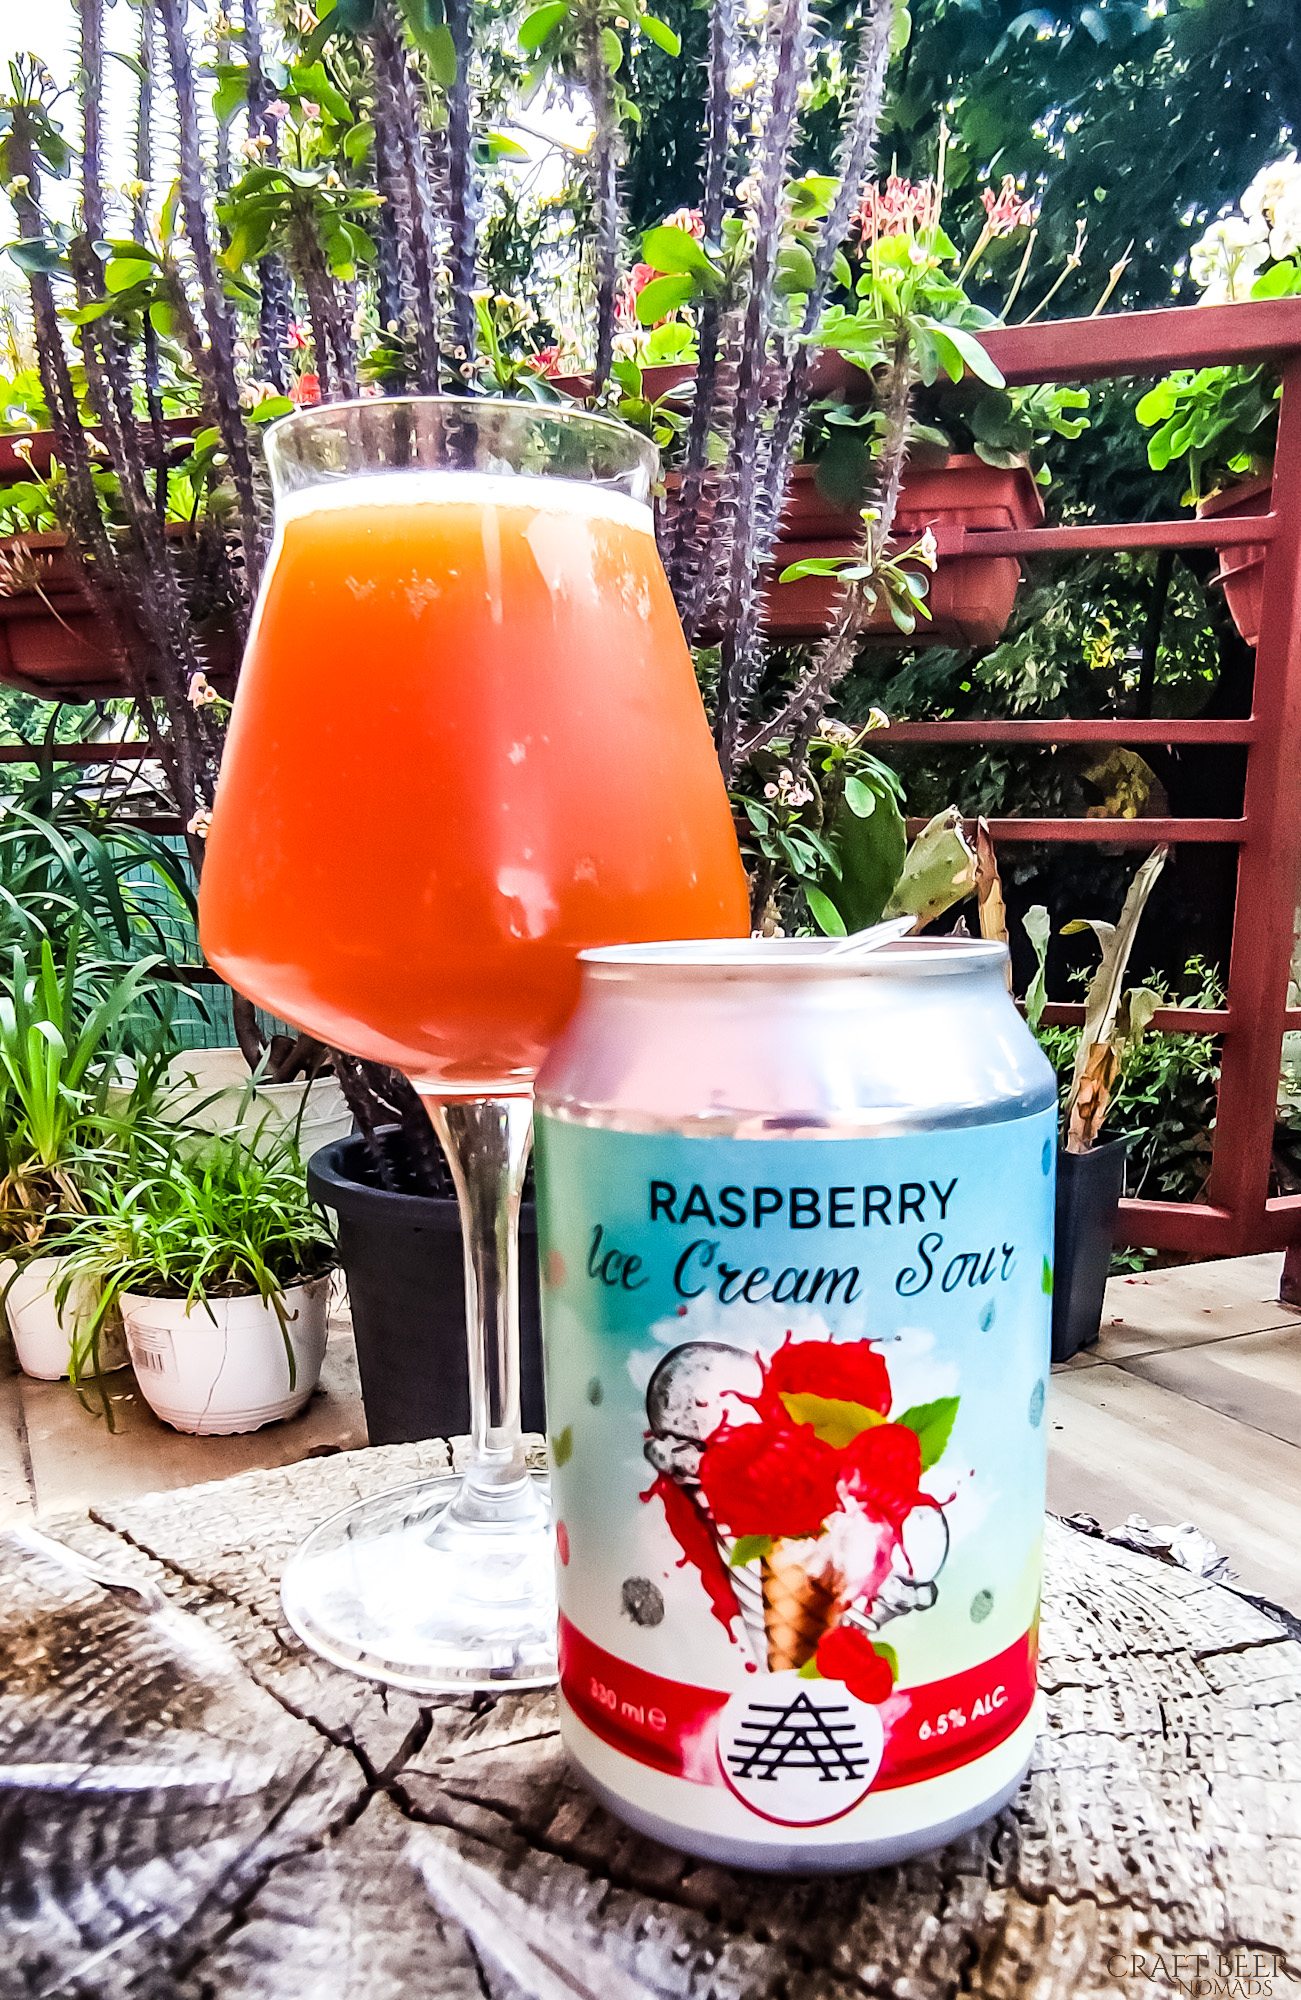 Alchemik Raspberry Ice Cream Sour | Craft Beer Nomads